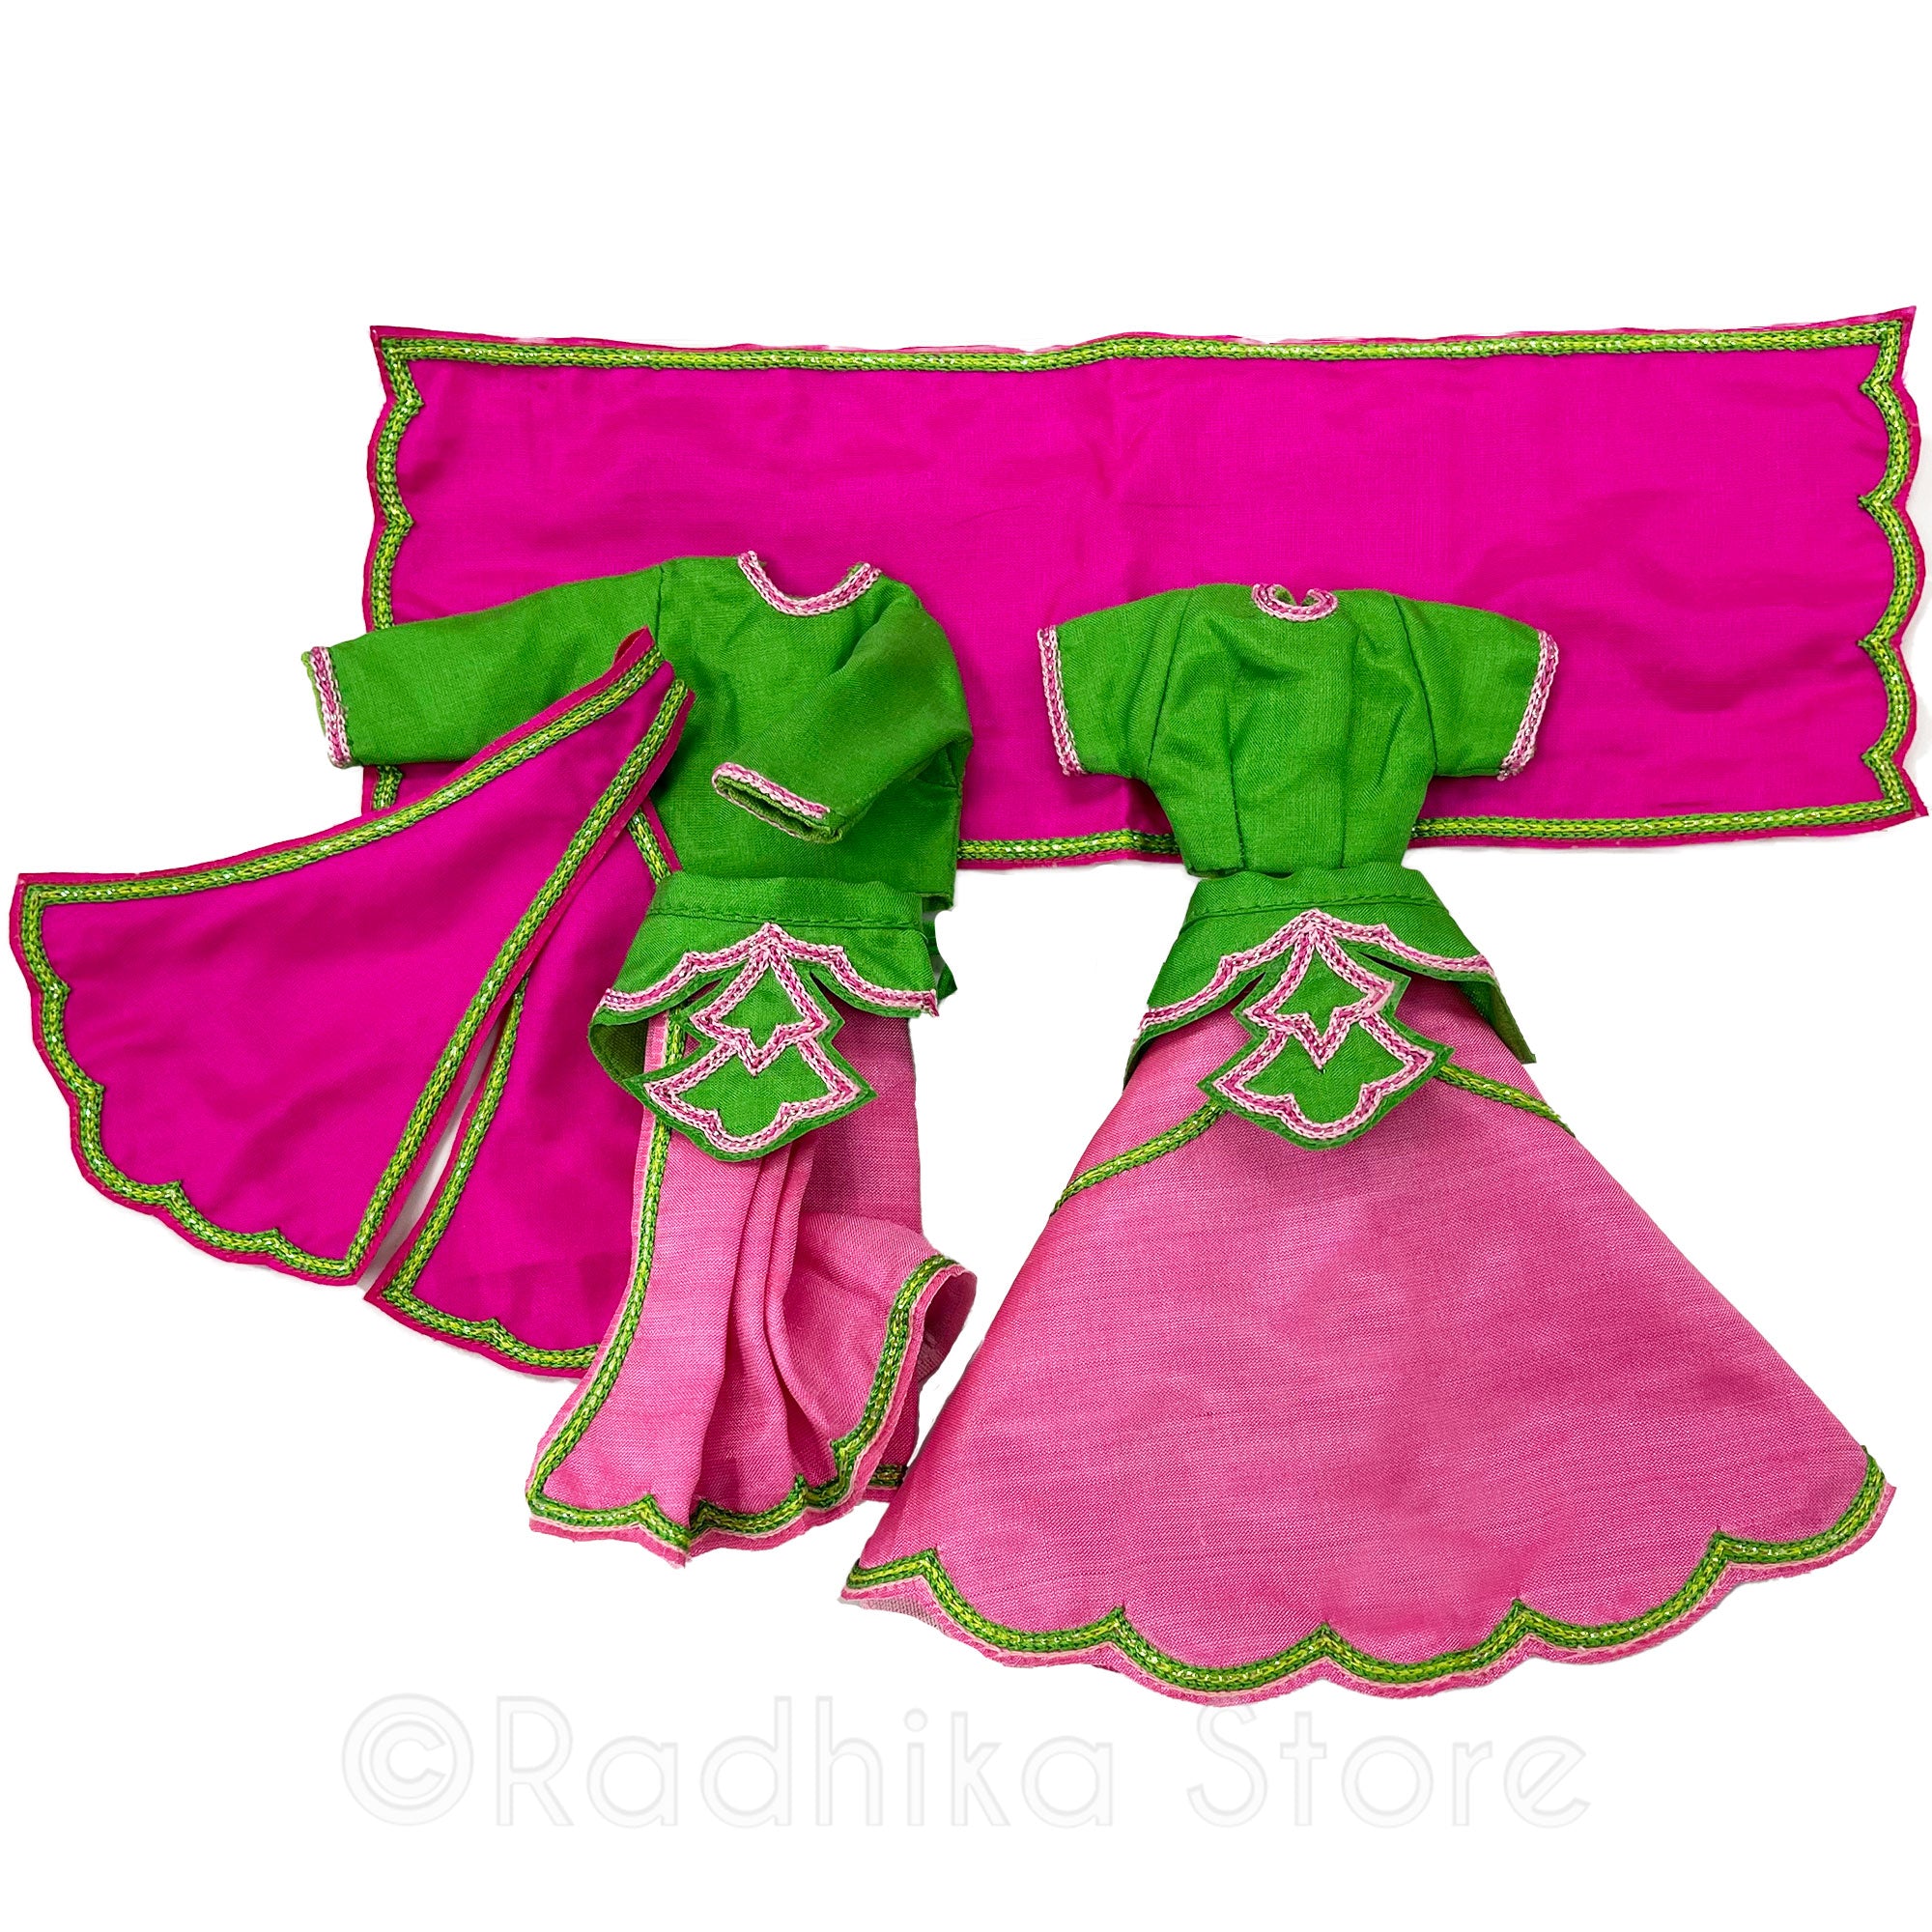 Vrindavan Spring - Silk - Pinks and Green - Radha Krishna Deity Outfit